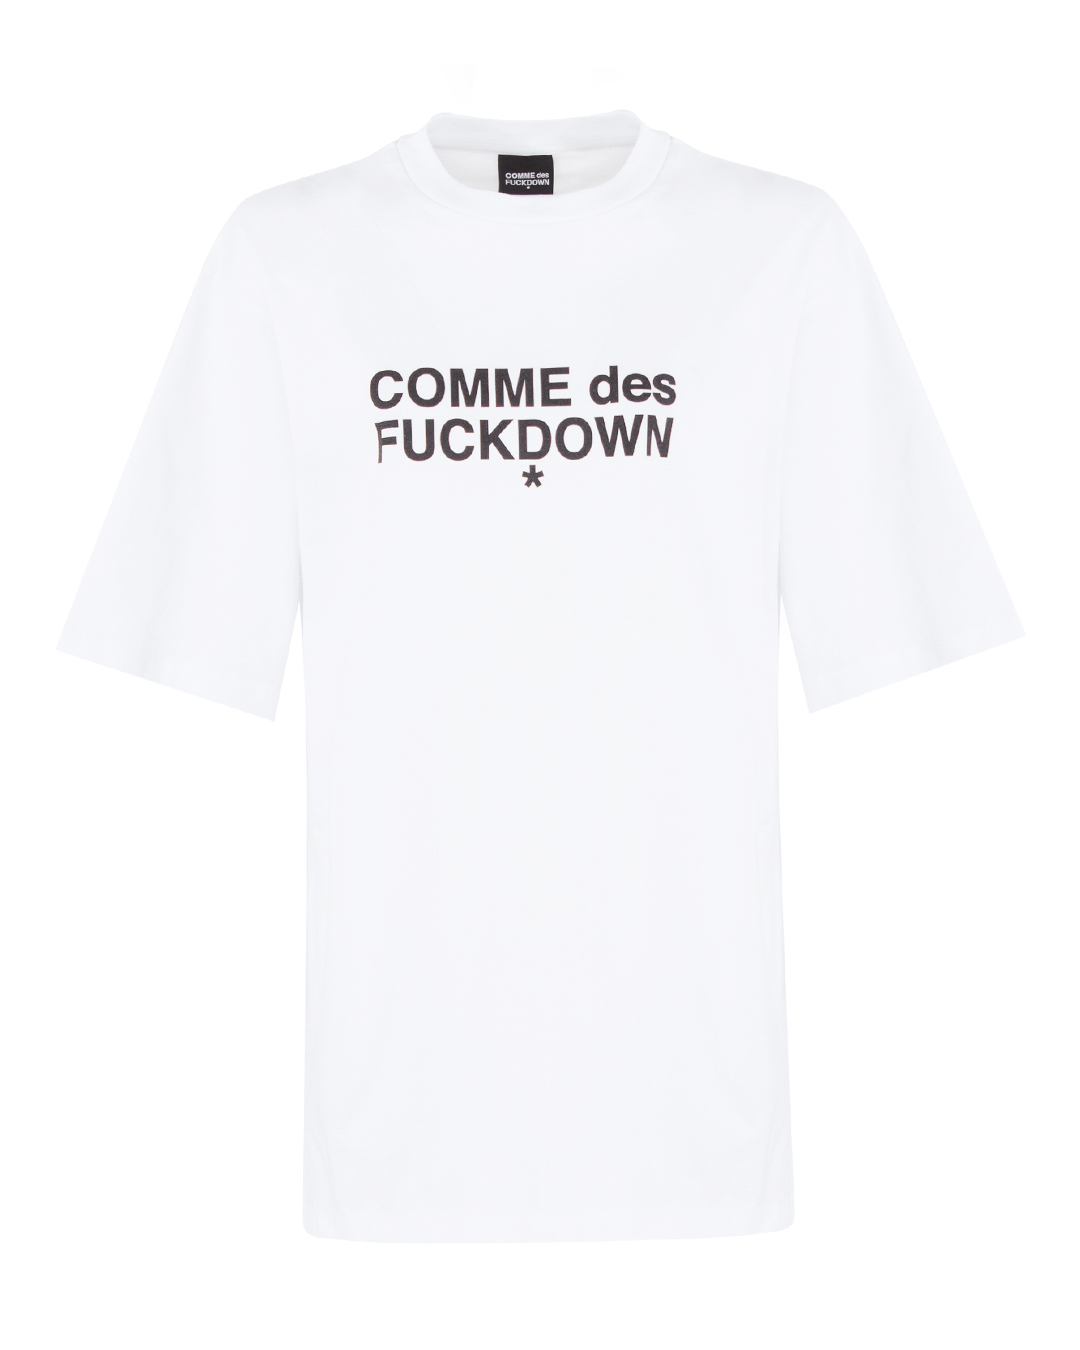 платье COMME des FUCKDOWN CFABW00013 белый m, размер m - фото 1